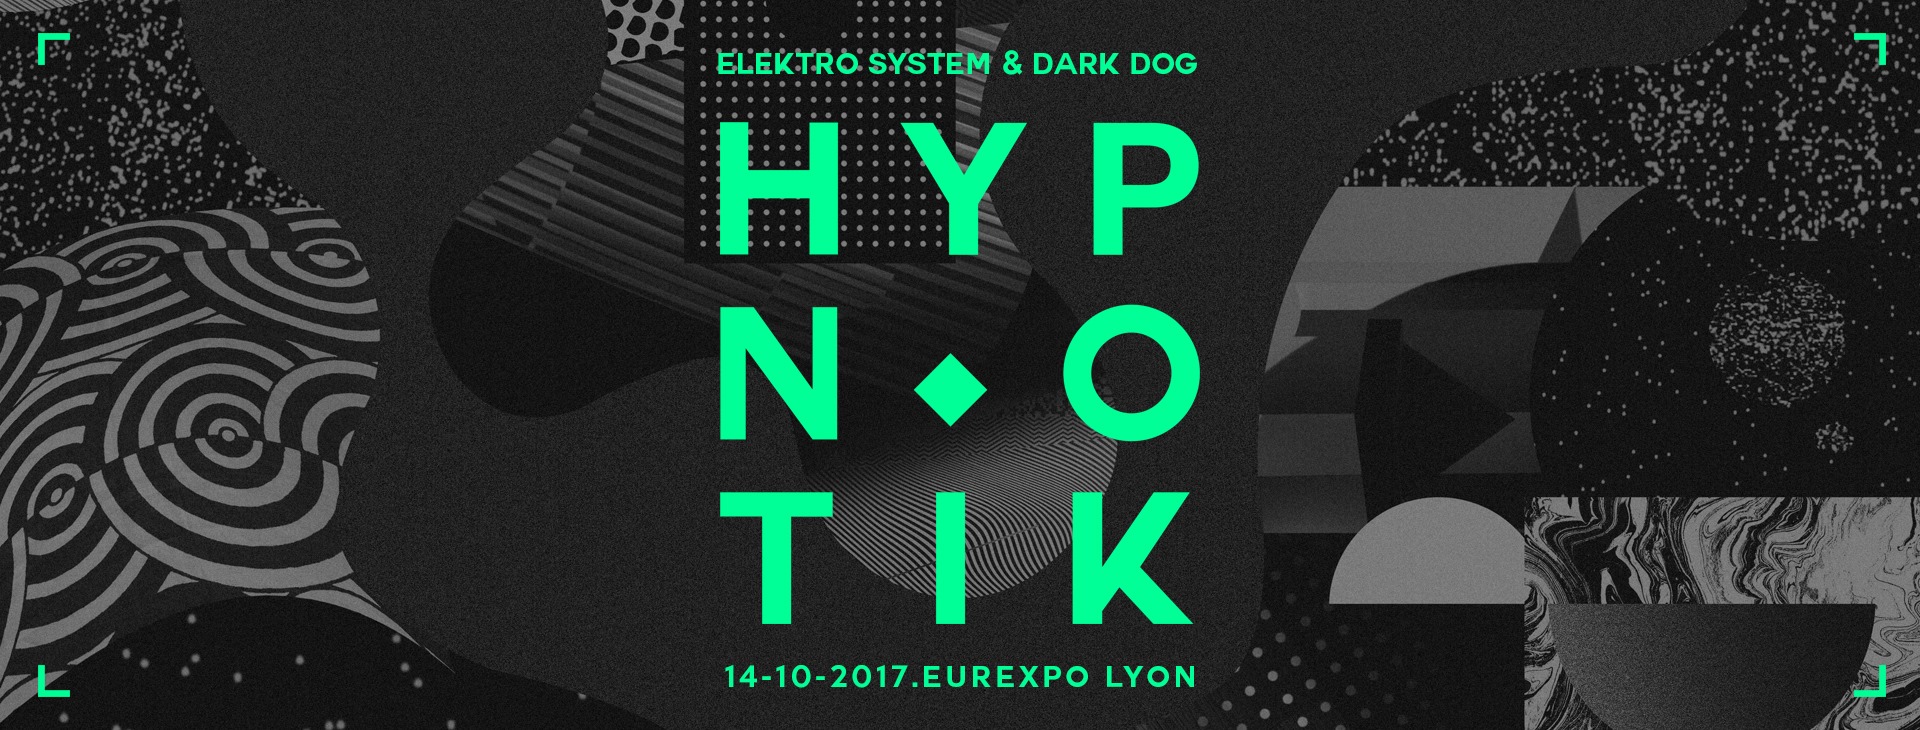 hypnotik 2017 dark dog elektro system samedi 14 octobre 2017 eurexpo lyon